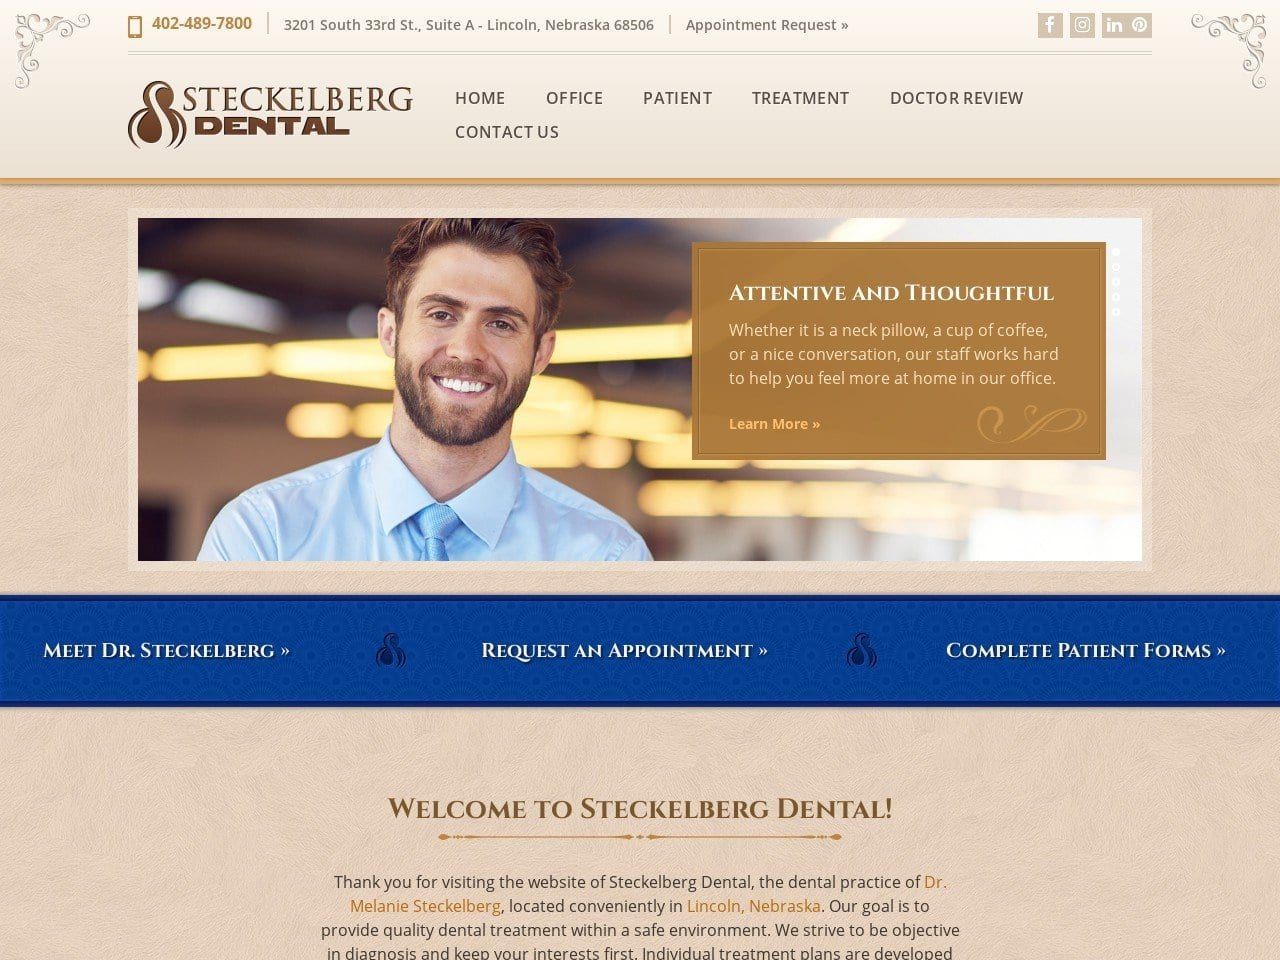 Steckelberg Dental Website Screenshot from steckelbergdental.com